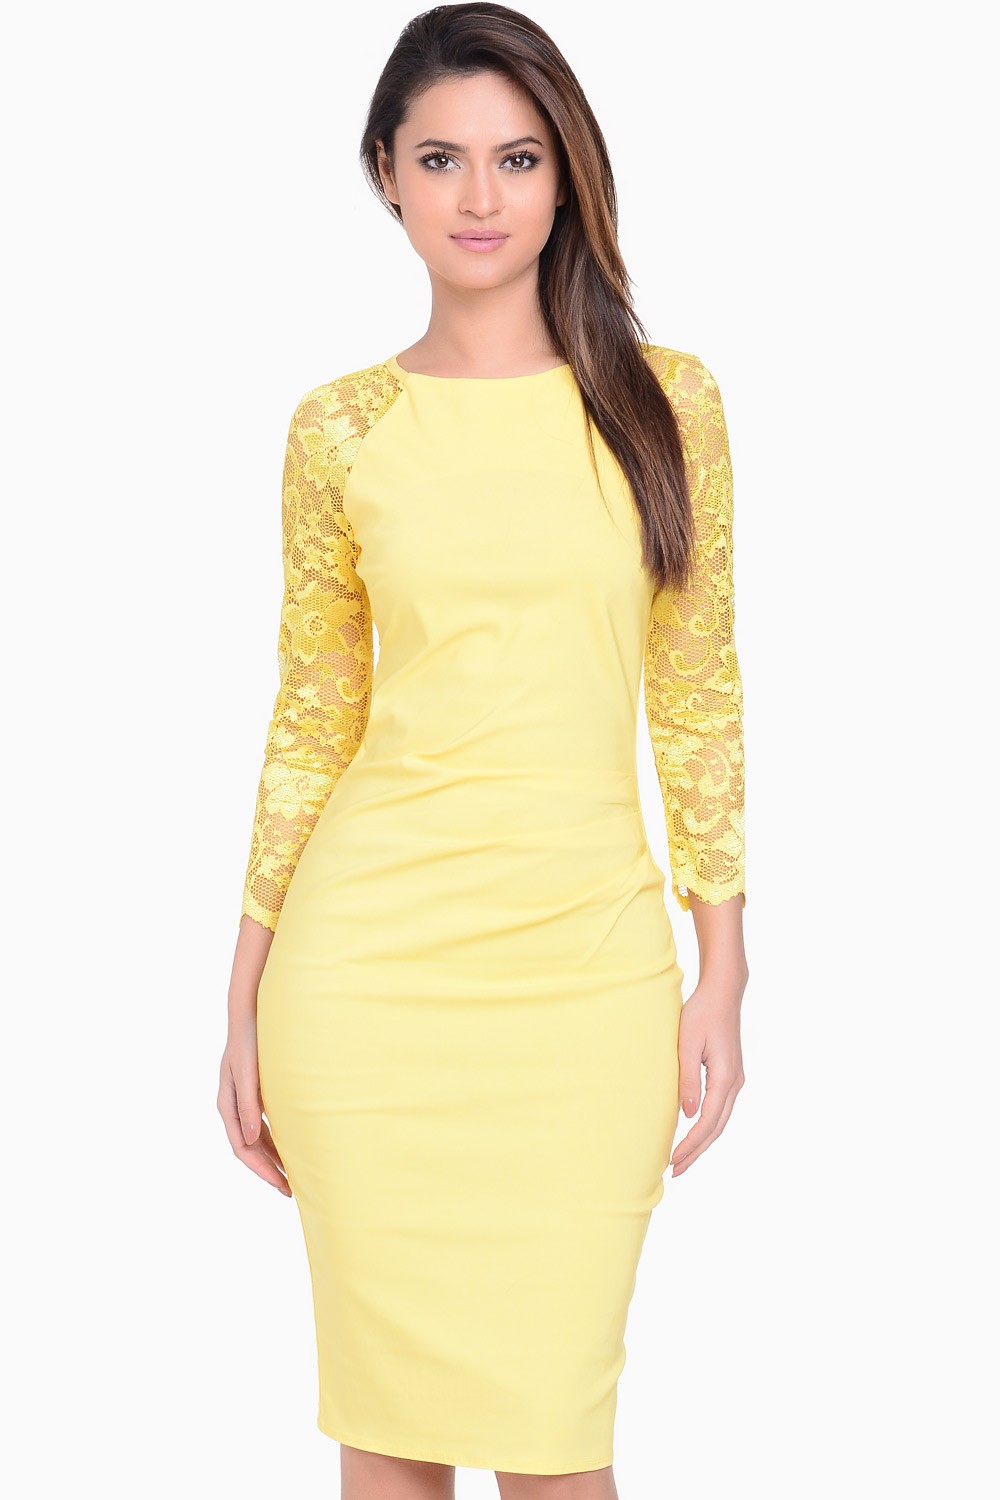 yellow dresses ireland